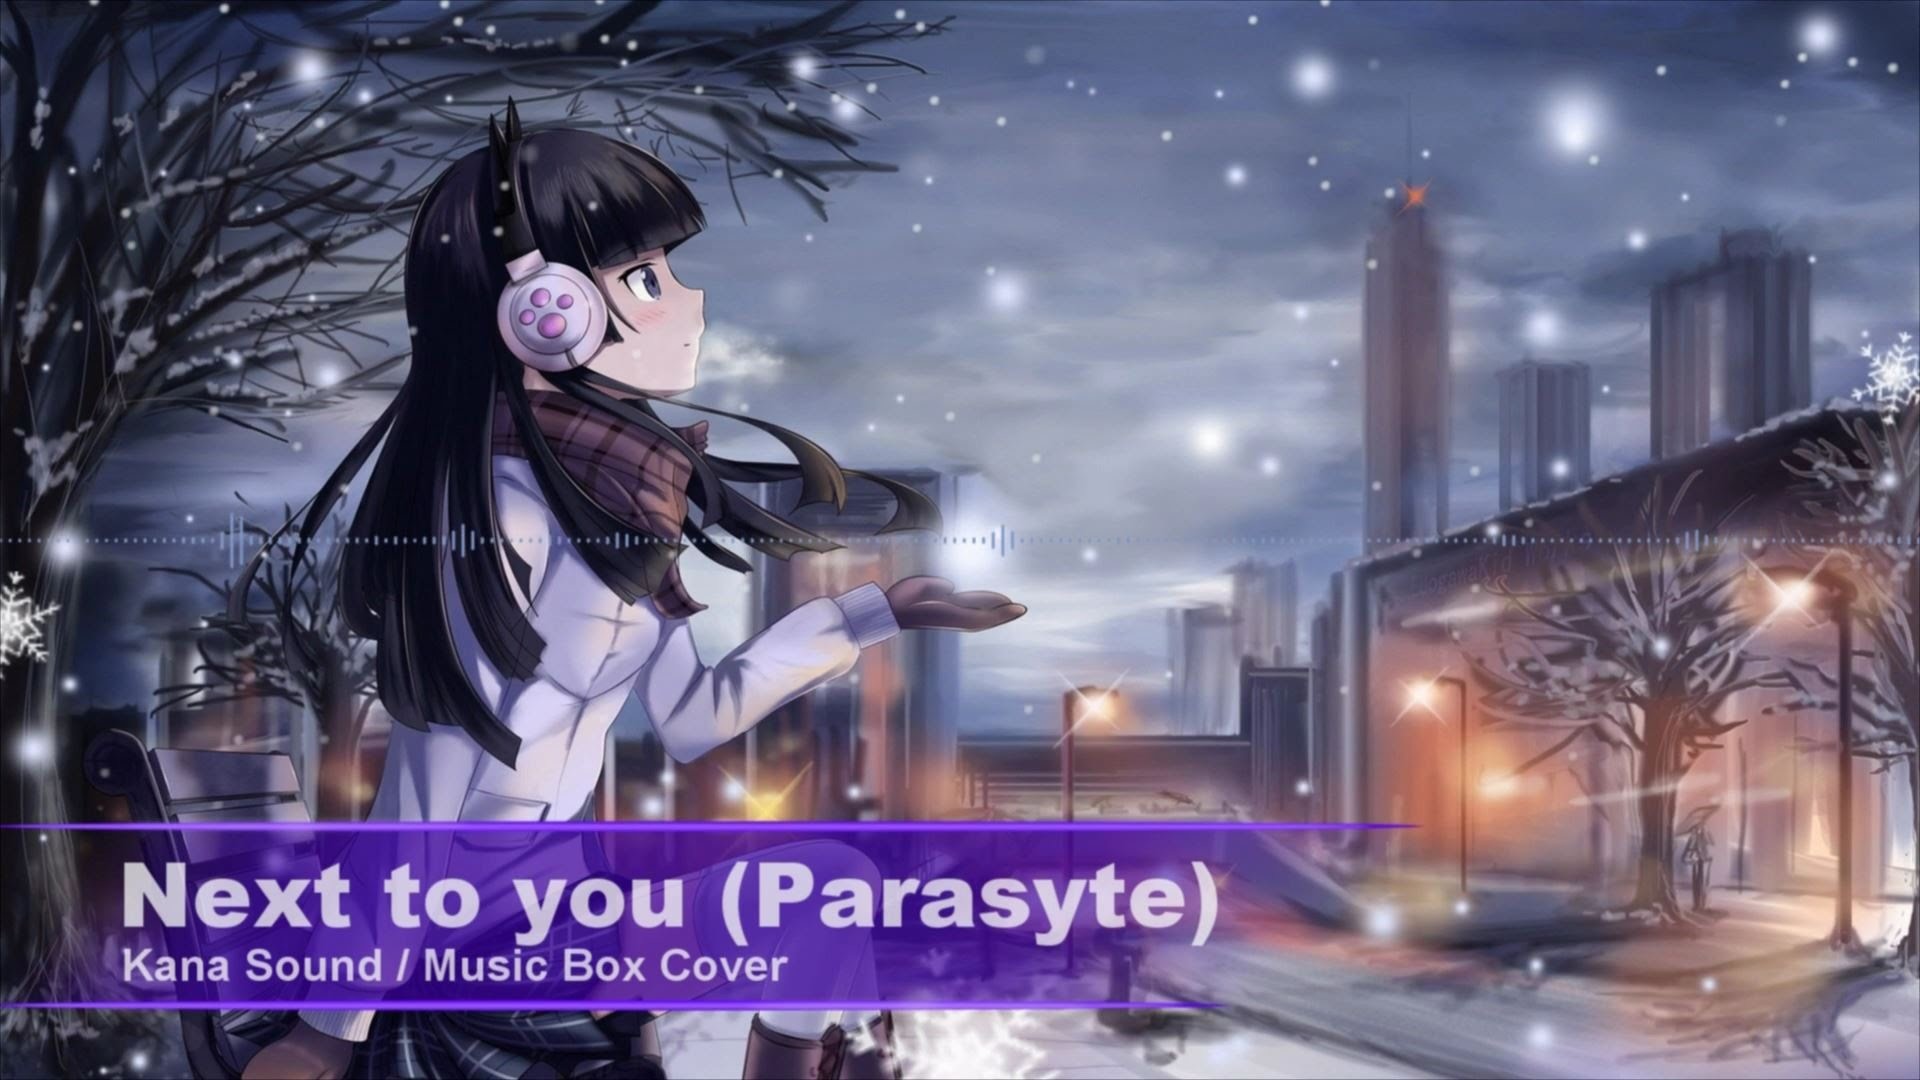 1920x1080 Next to you (Parasyte) - Music Box Cover